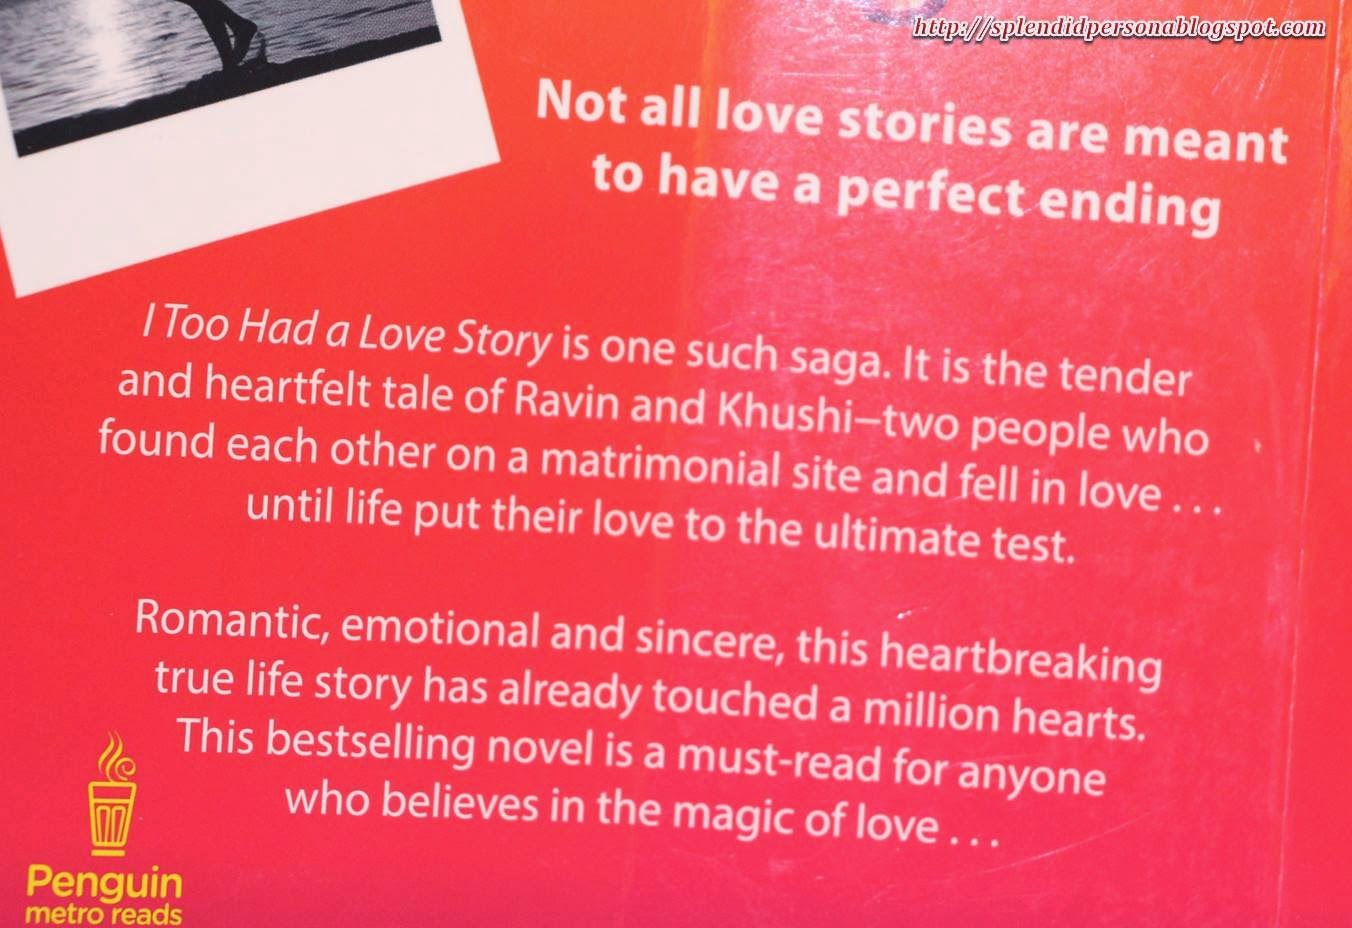 Splendid Persona: I Too Had a Love Story